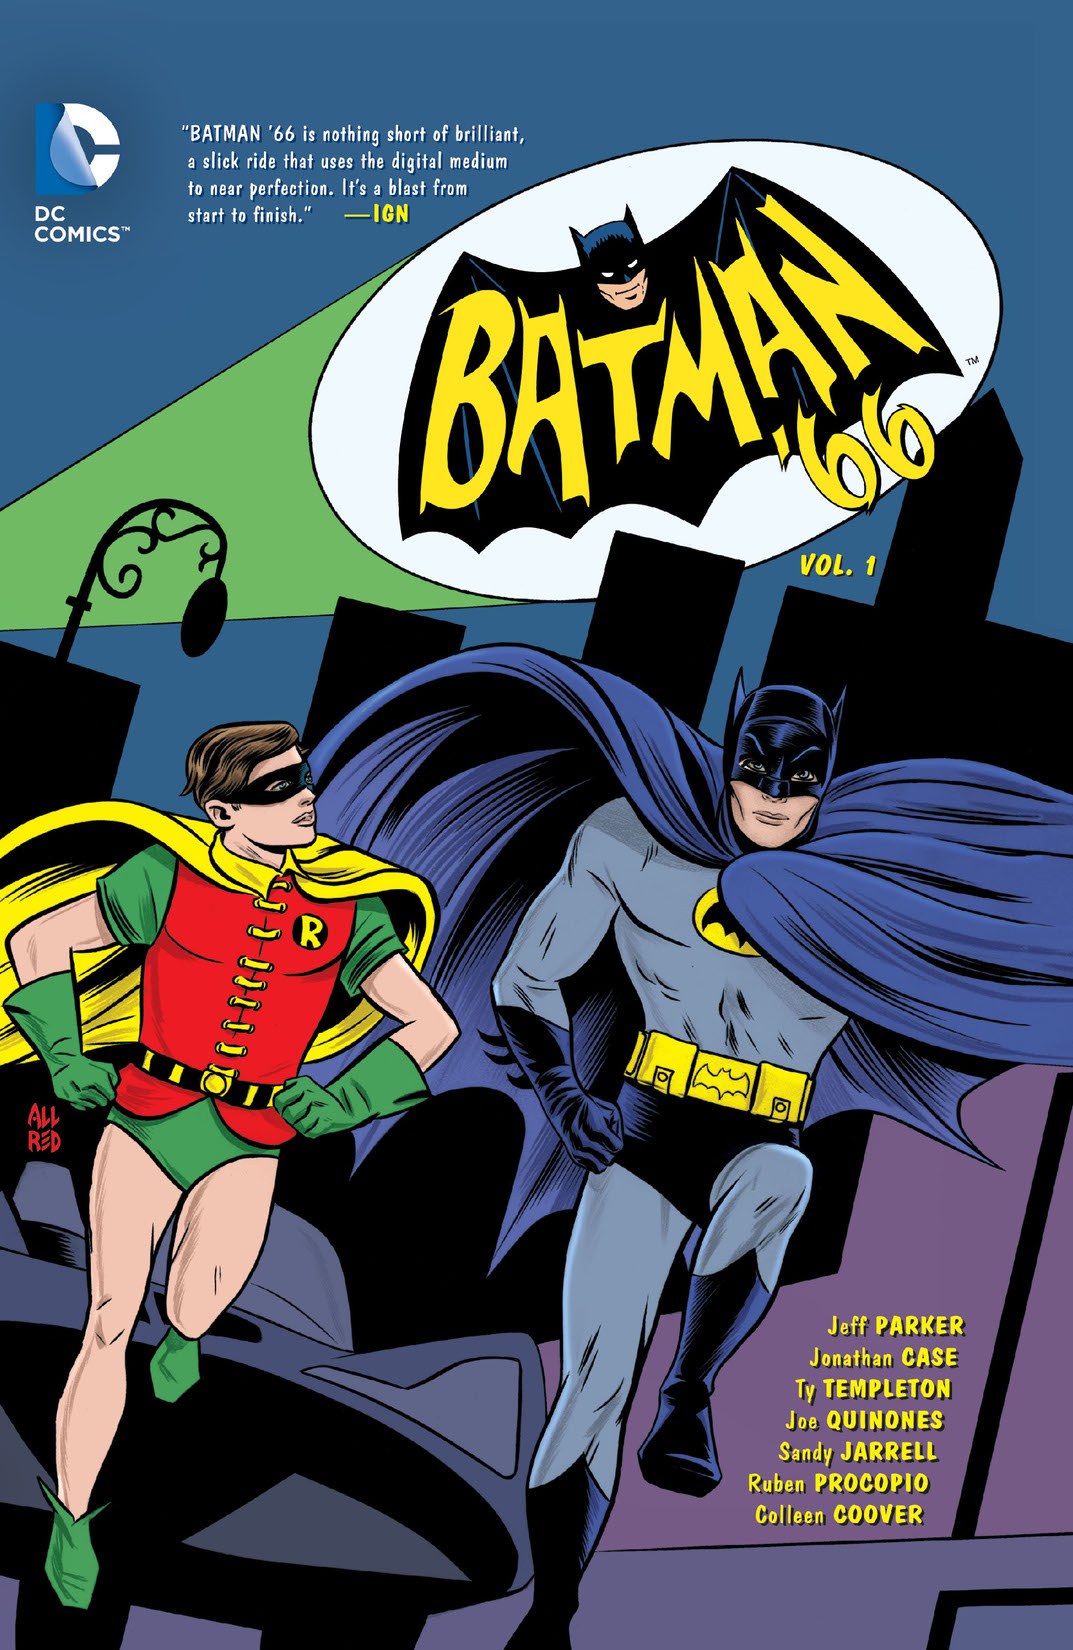 Batman '66 Vol. 1 preview images